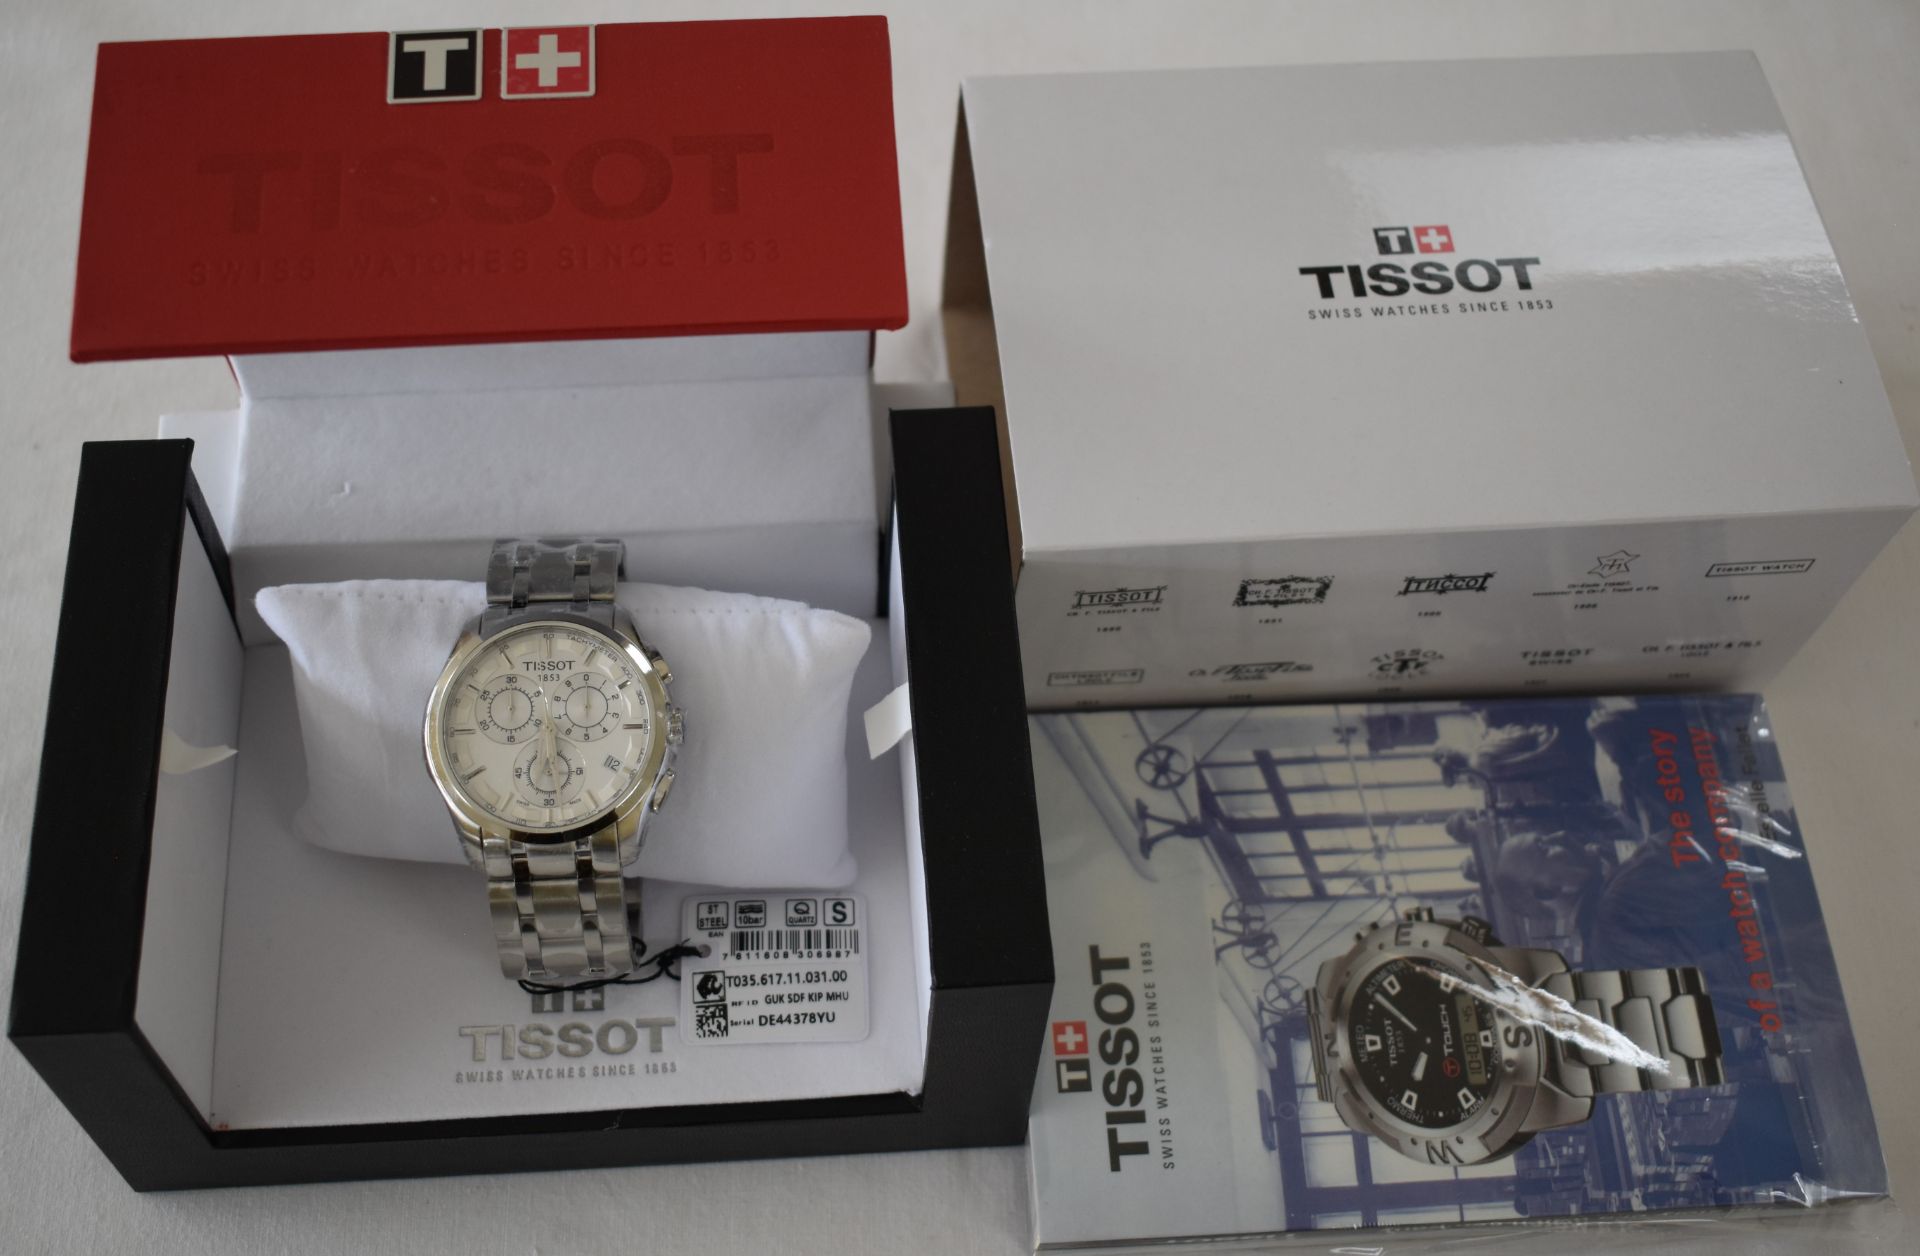 Tissot Men's Watch TO35.617.11.031.00 - Image 3 of 3